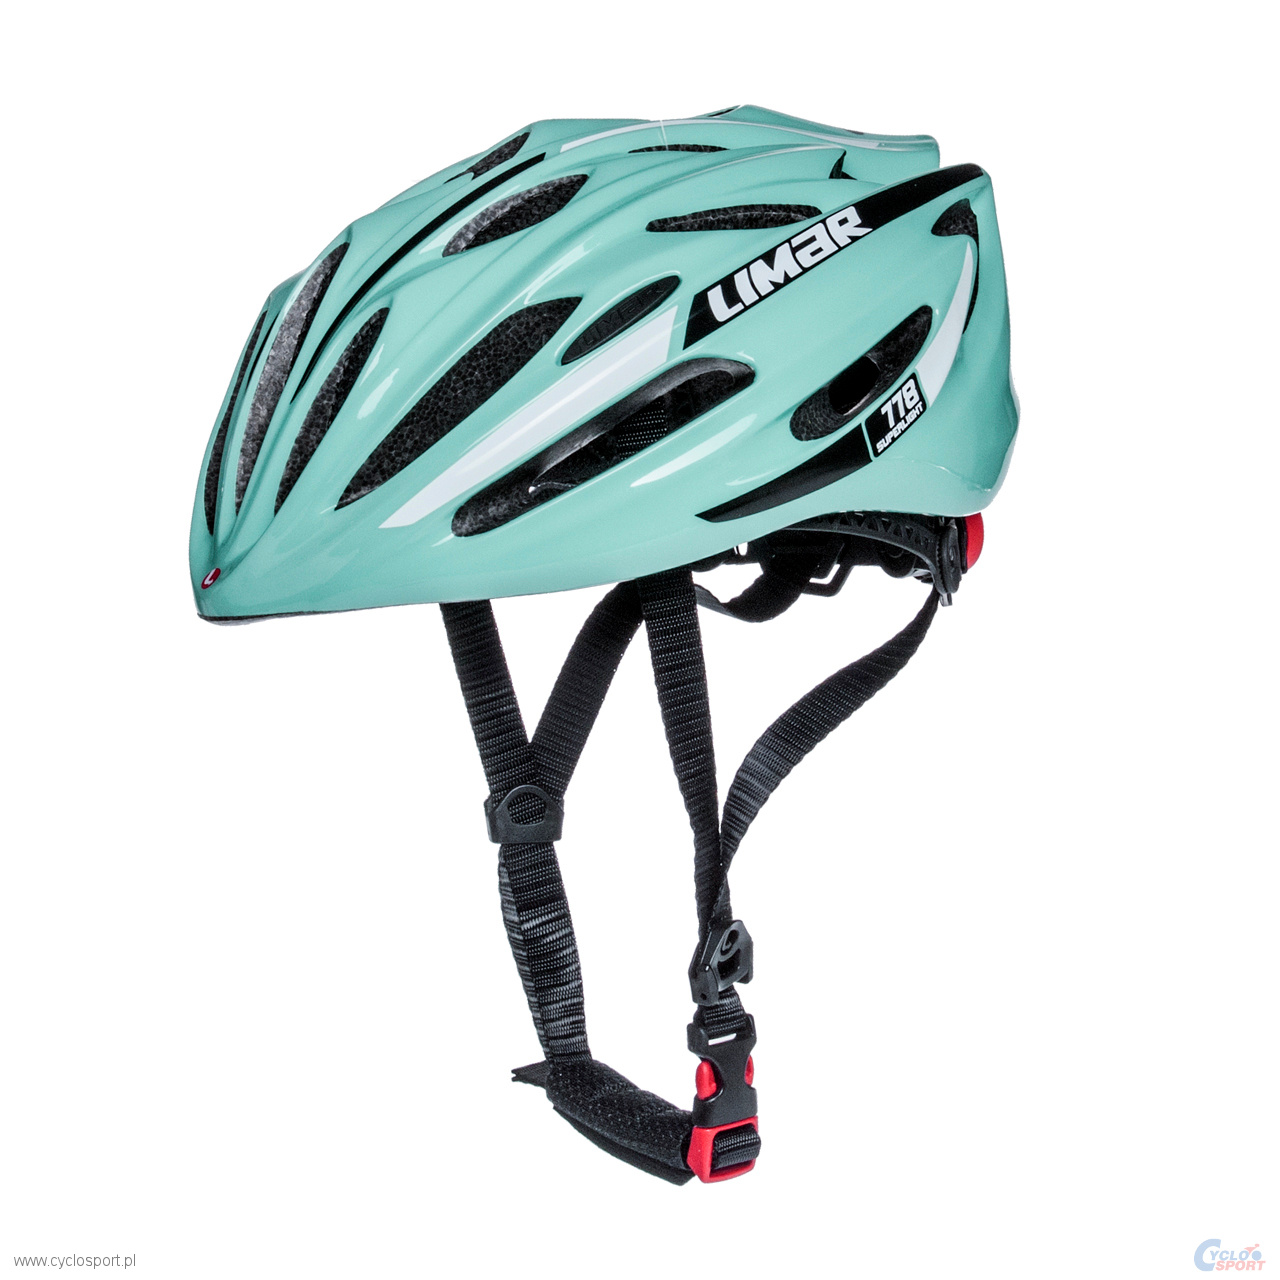 Sizes M 52-57cm Limar 778 Superlight Road Cycling Helmet Green 